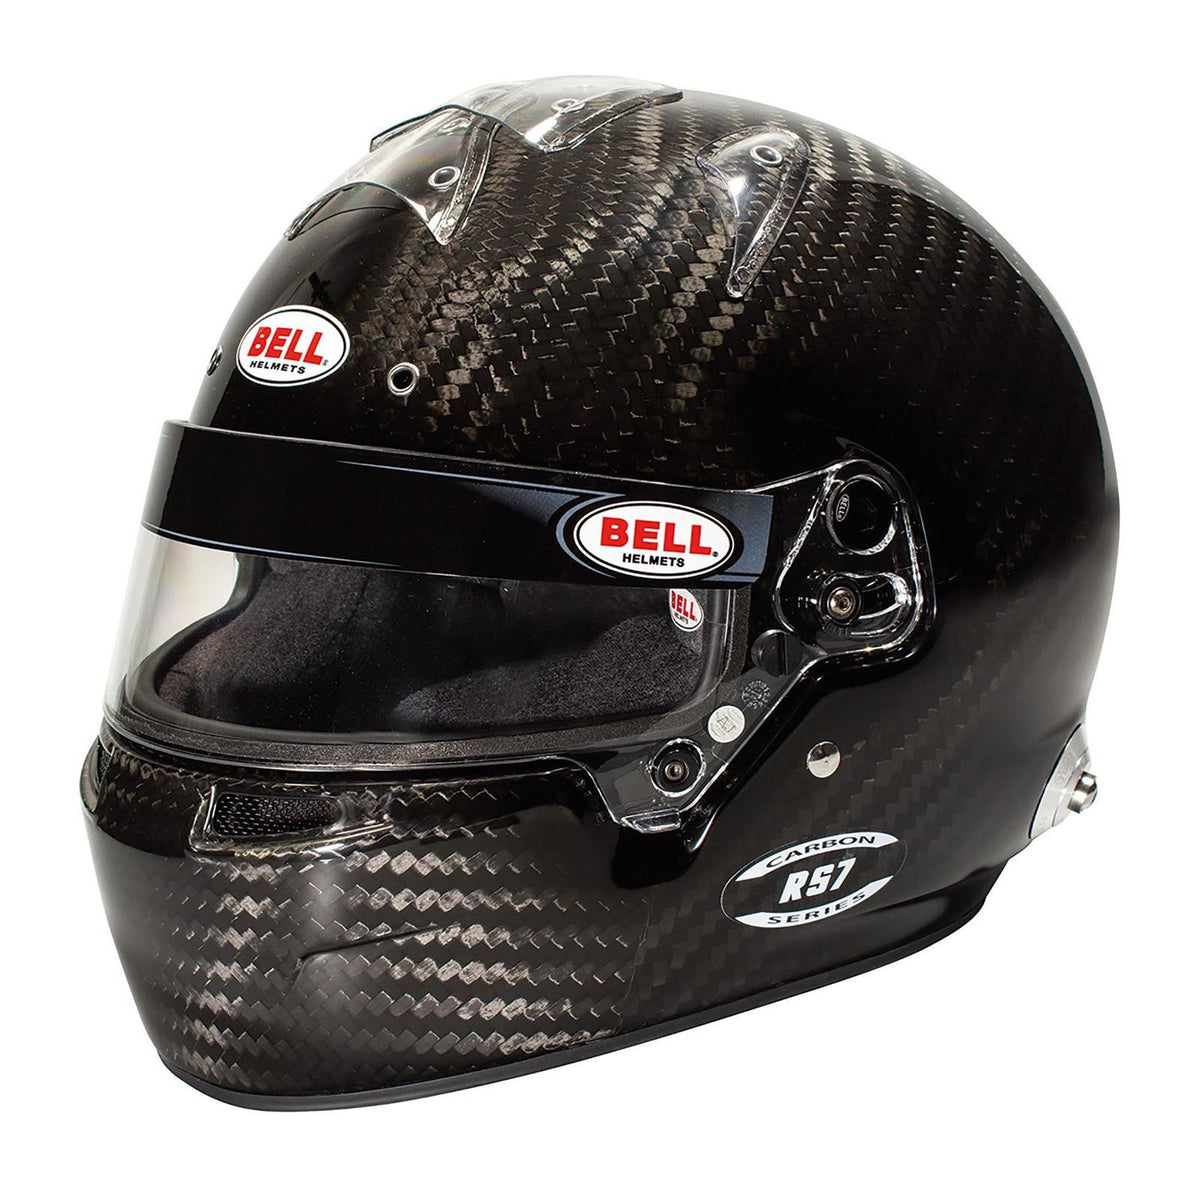 Bell RS7 Carbon No Duckbill Helmet 57- cm